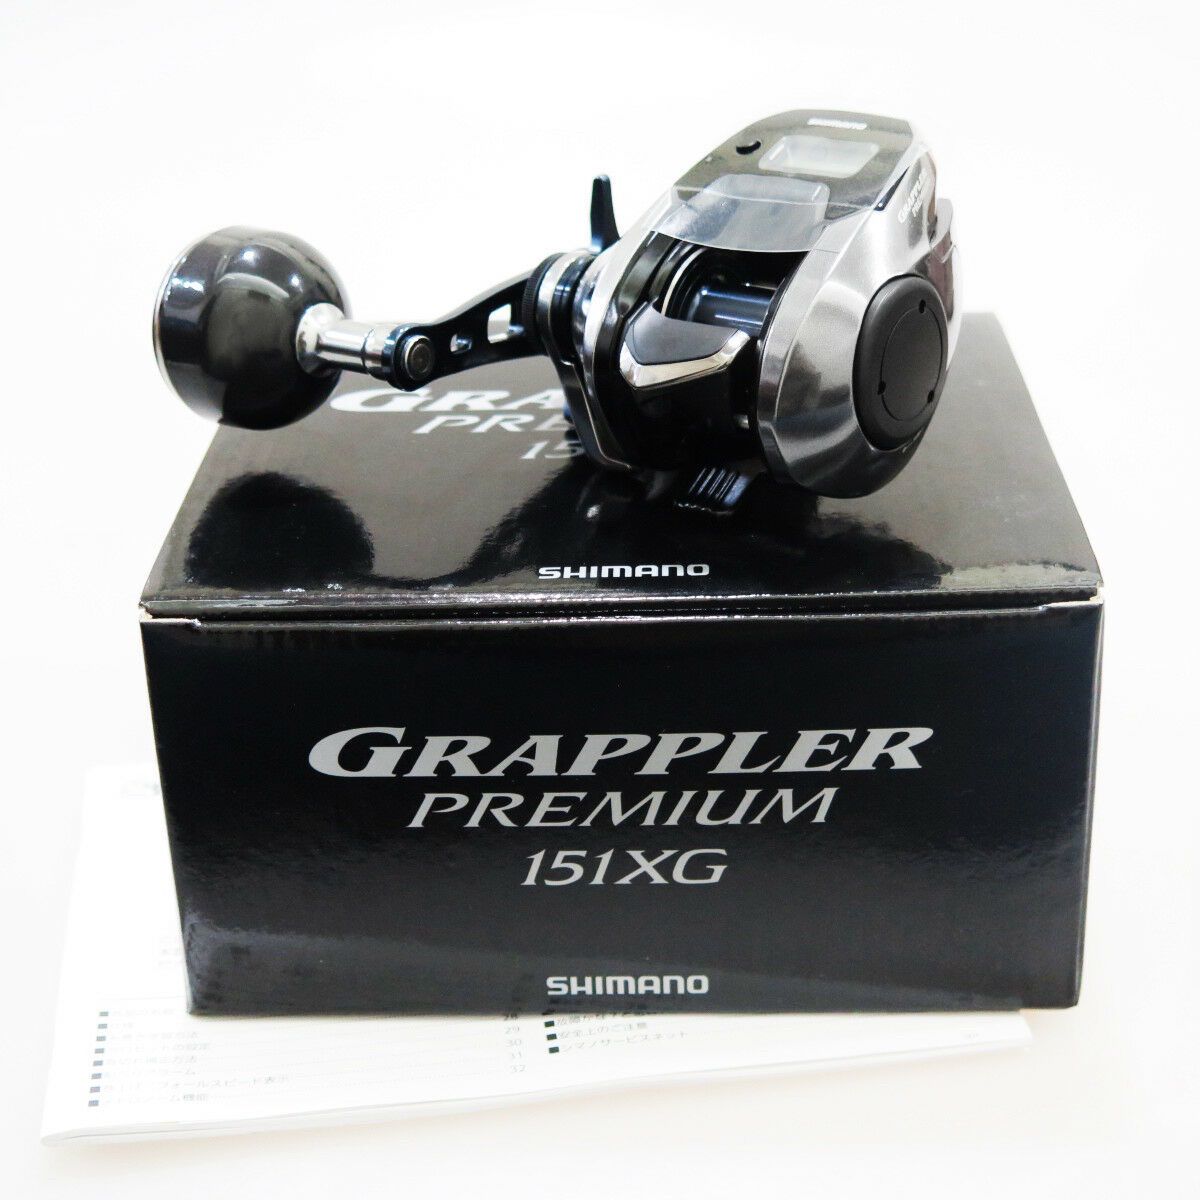 18 Shimano Glappler Premium 151XG